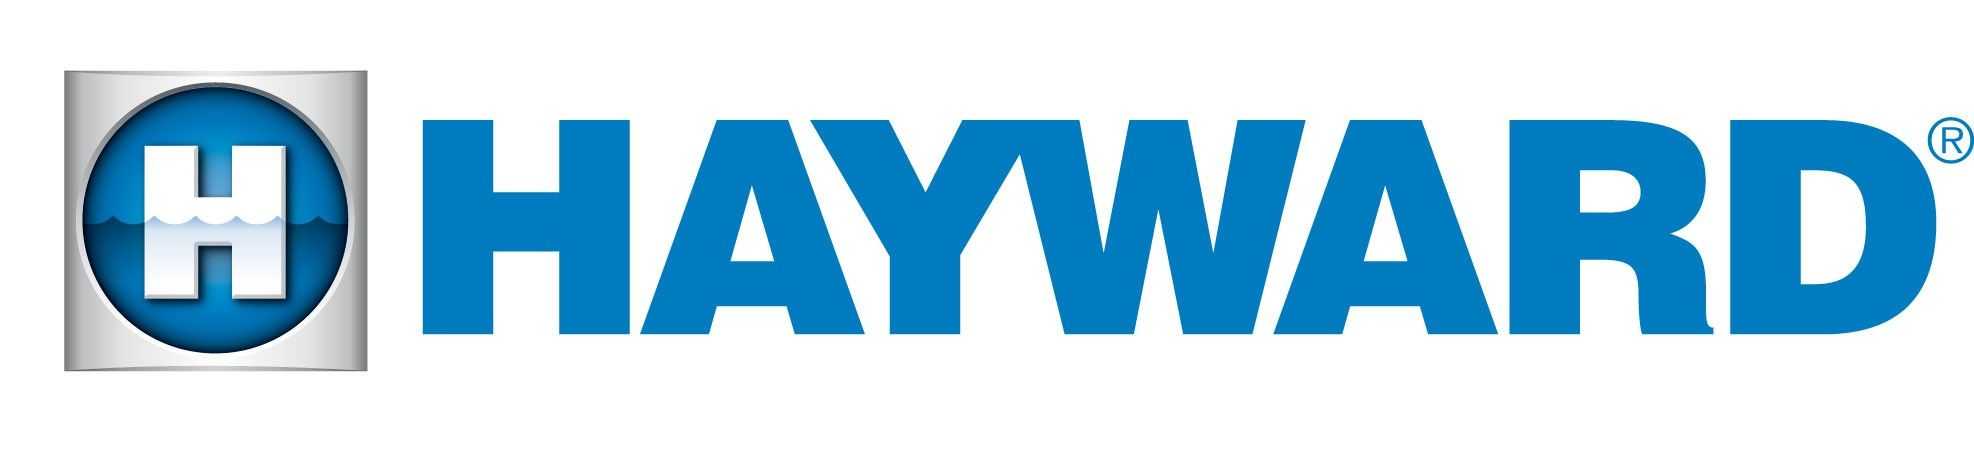 logo-hayward